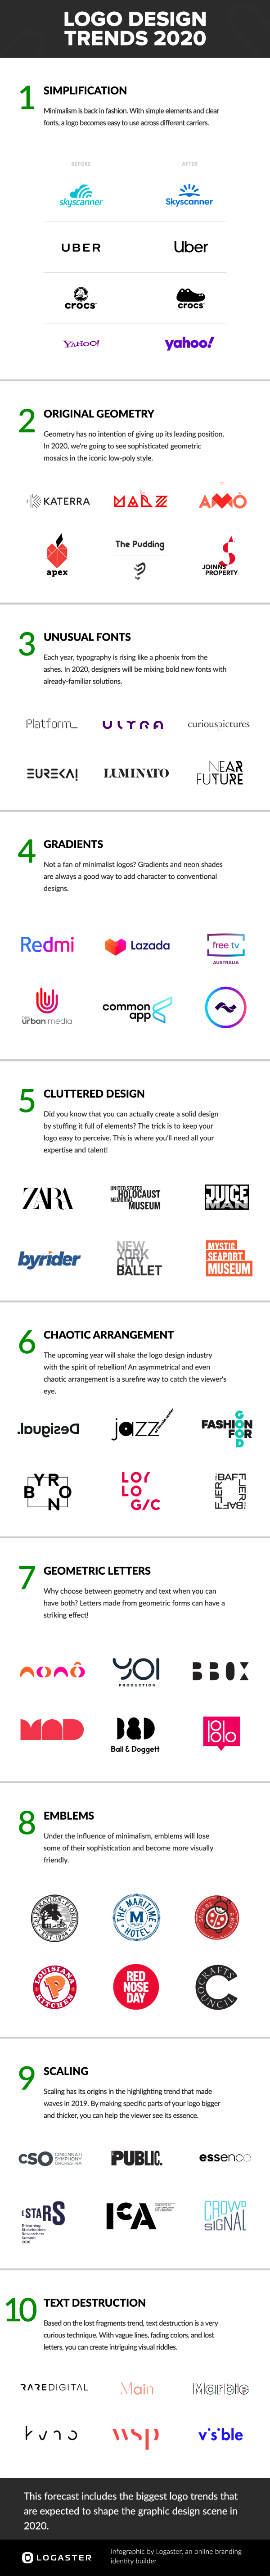 Logo Design Trends 2020 Infographic